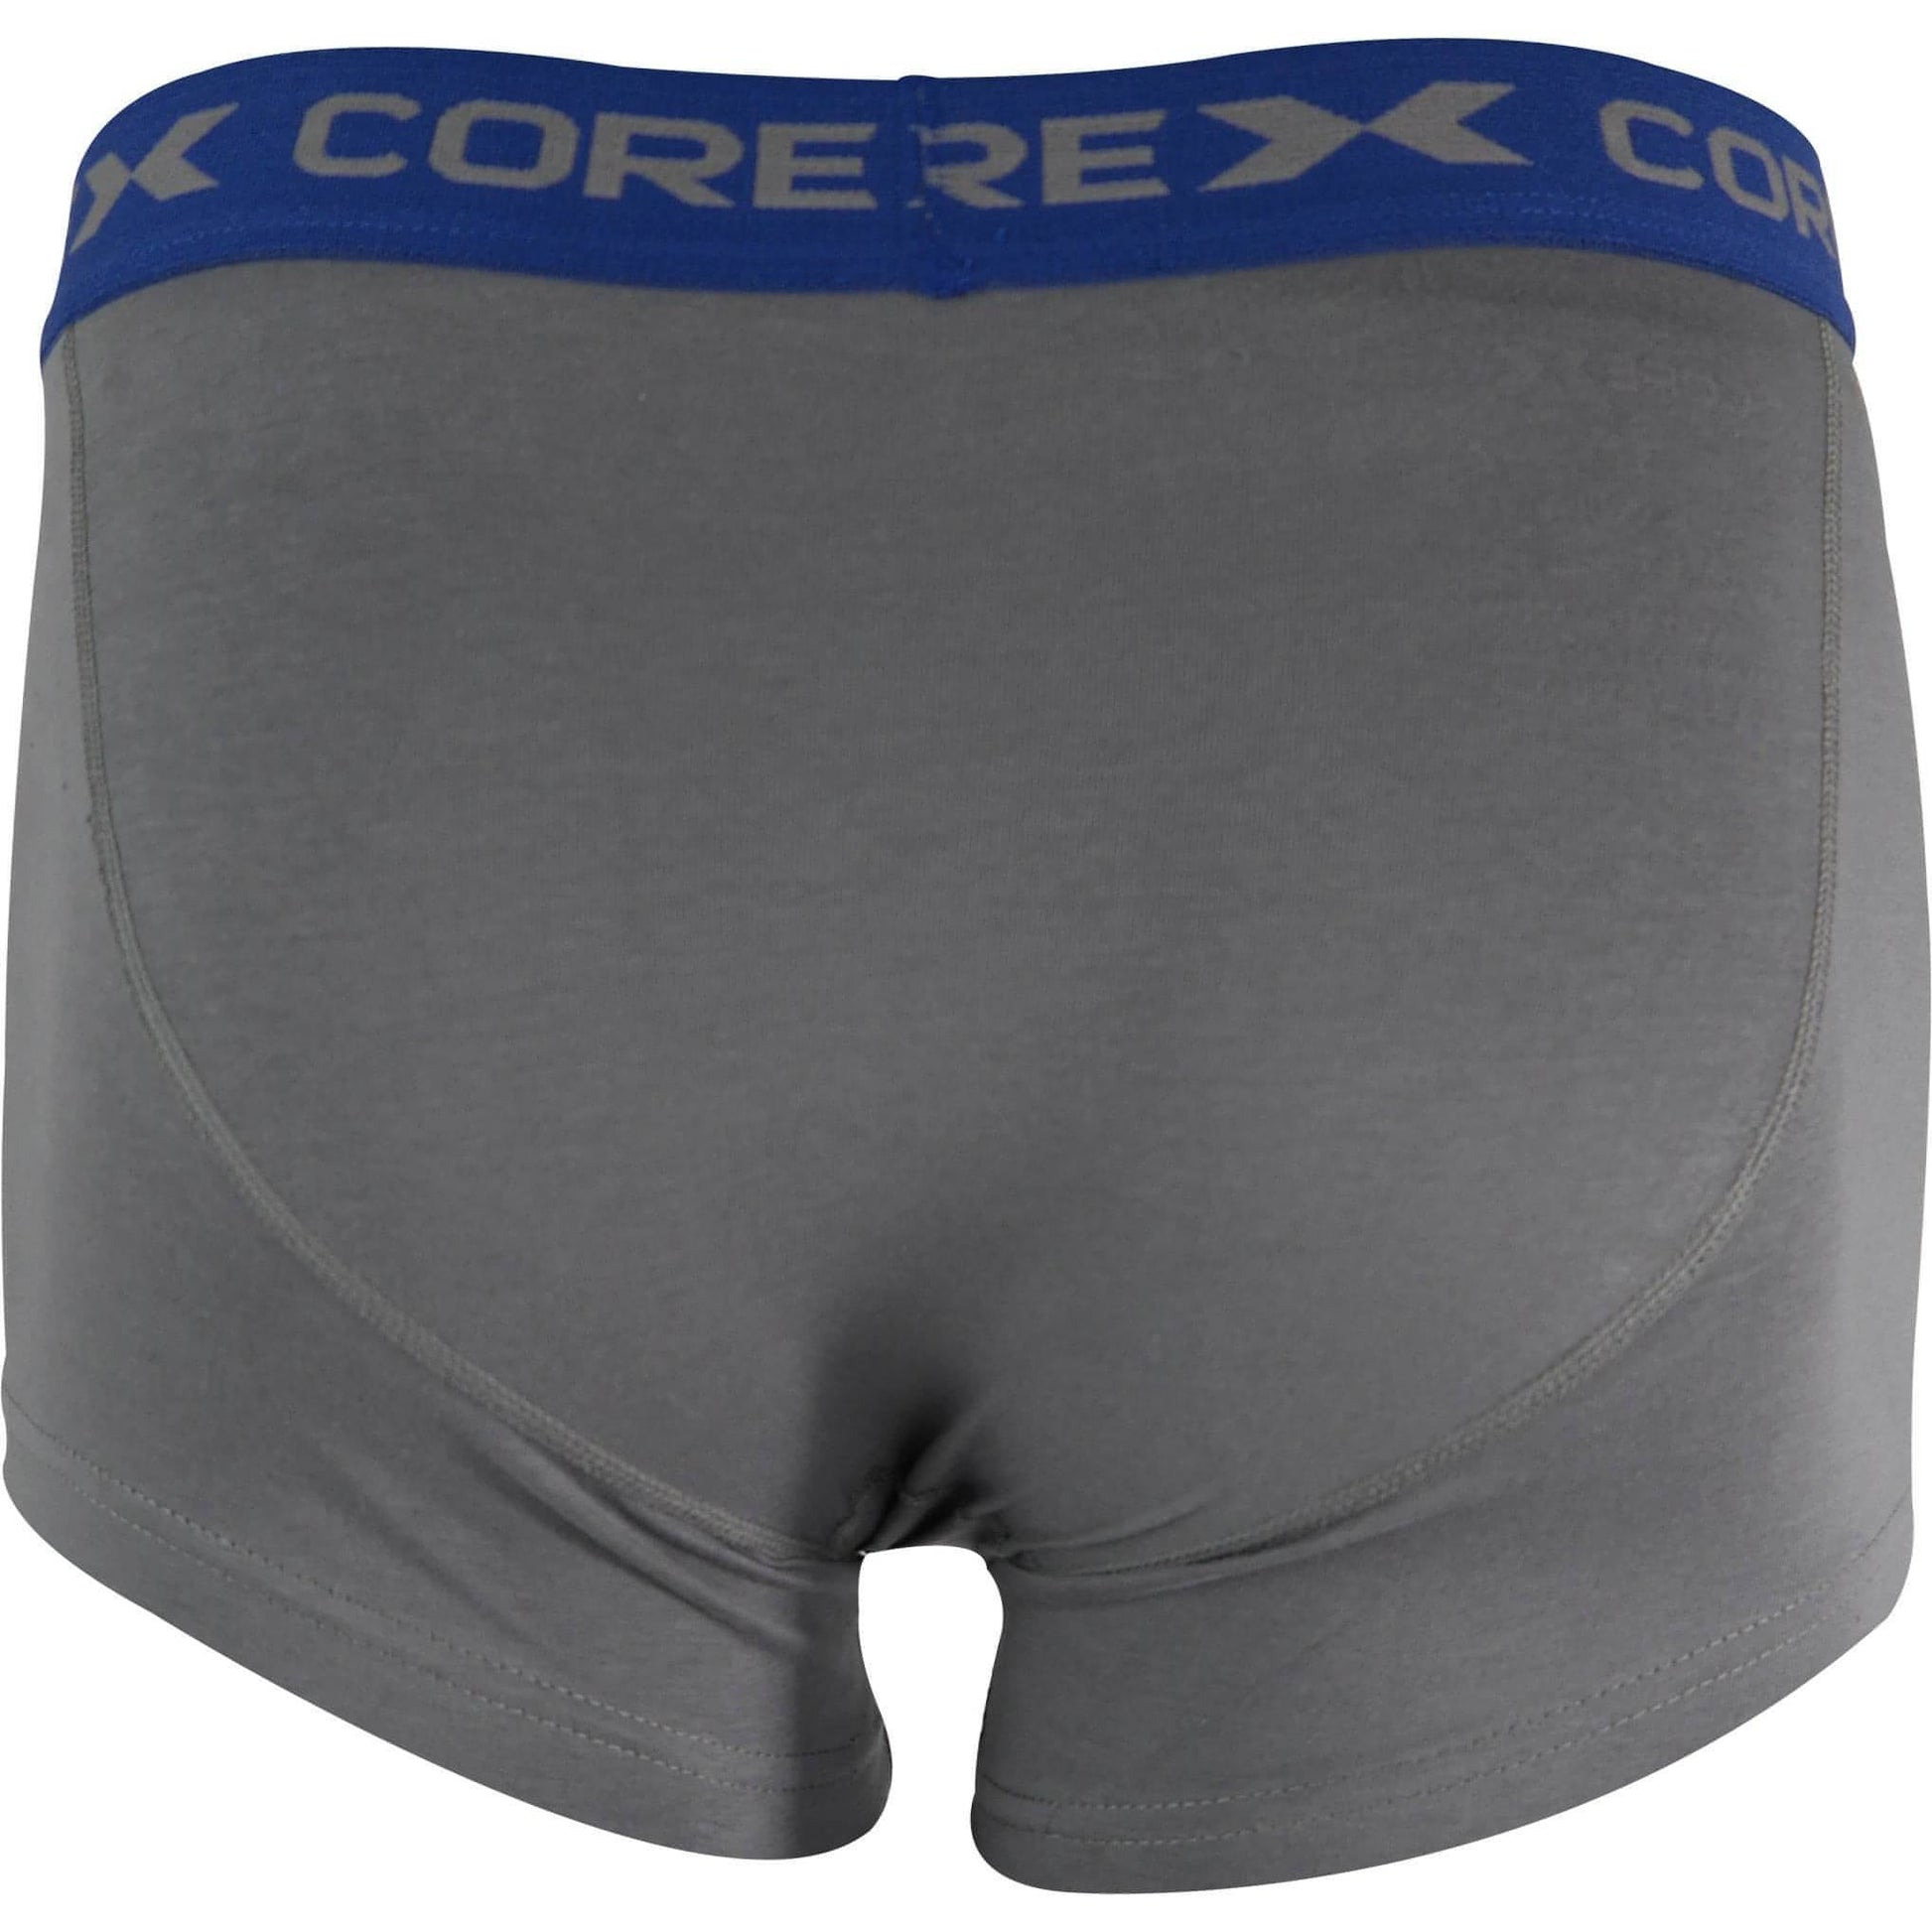 Corex Fitness Classic Pack Boxers 1P204911Wm Royalgrey Grey Back View